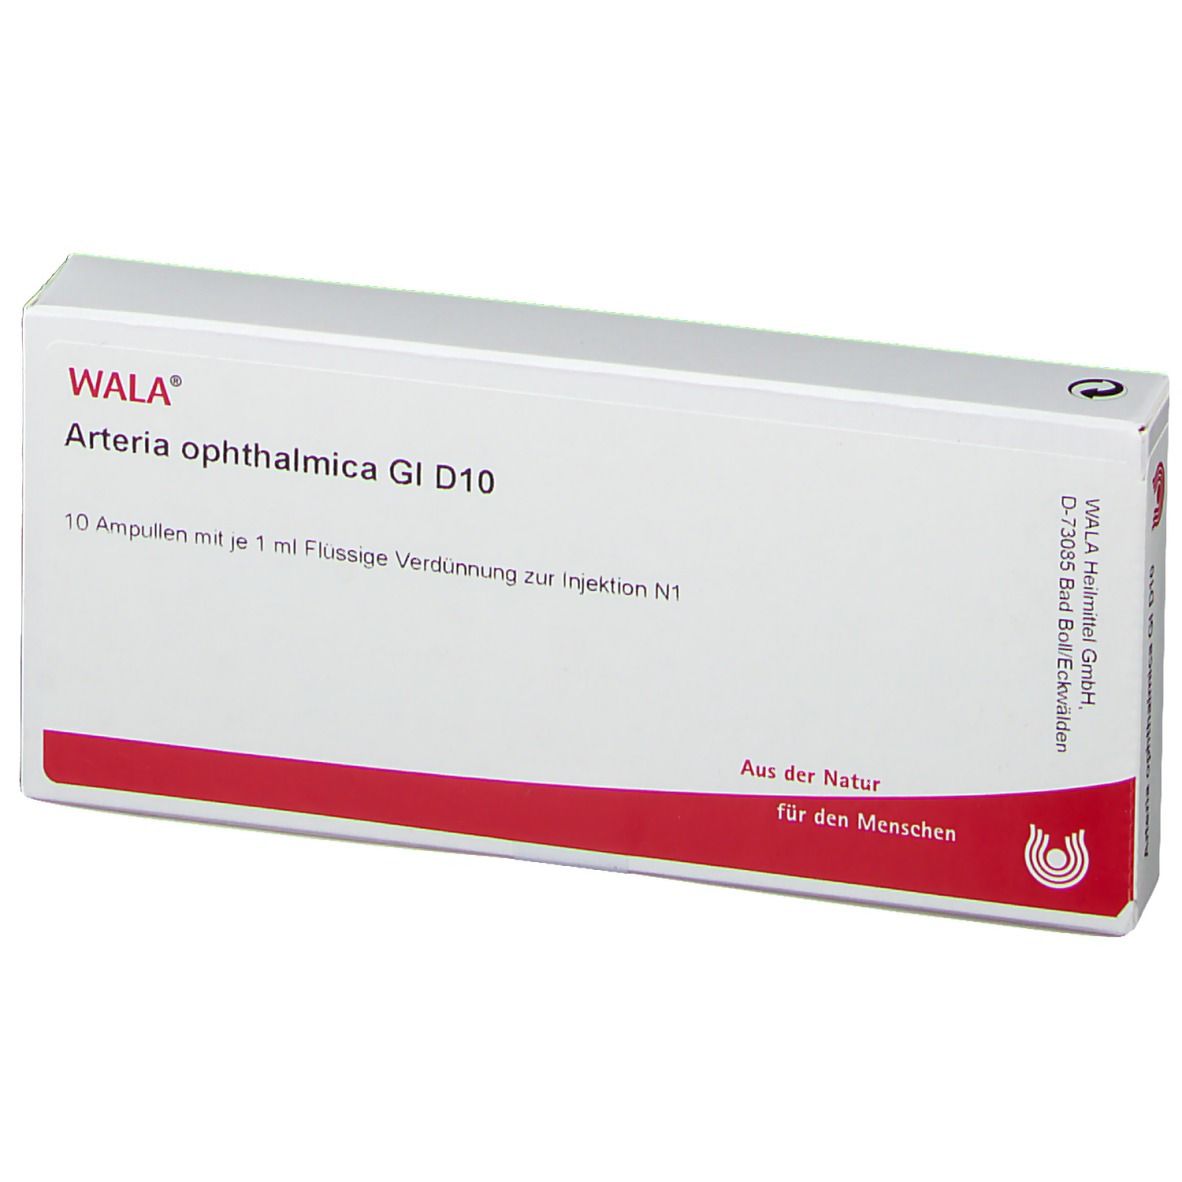 WALA® Arteria ophthalmica Gl D 10